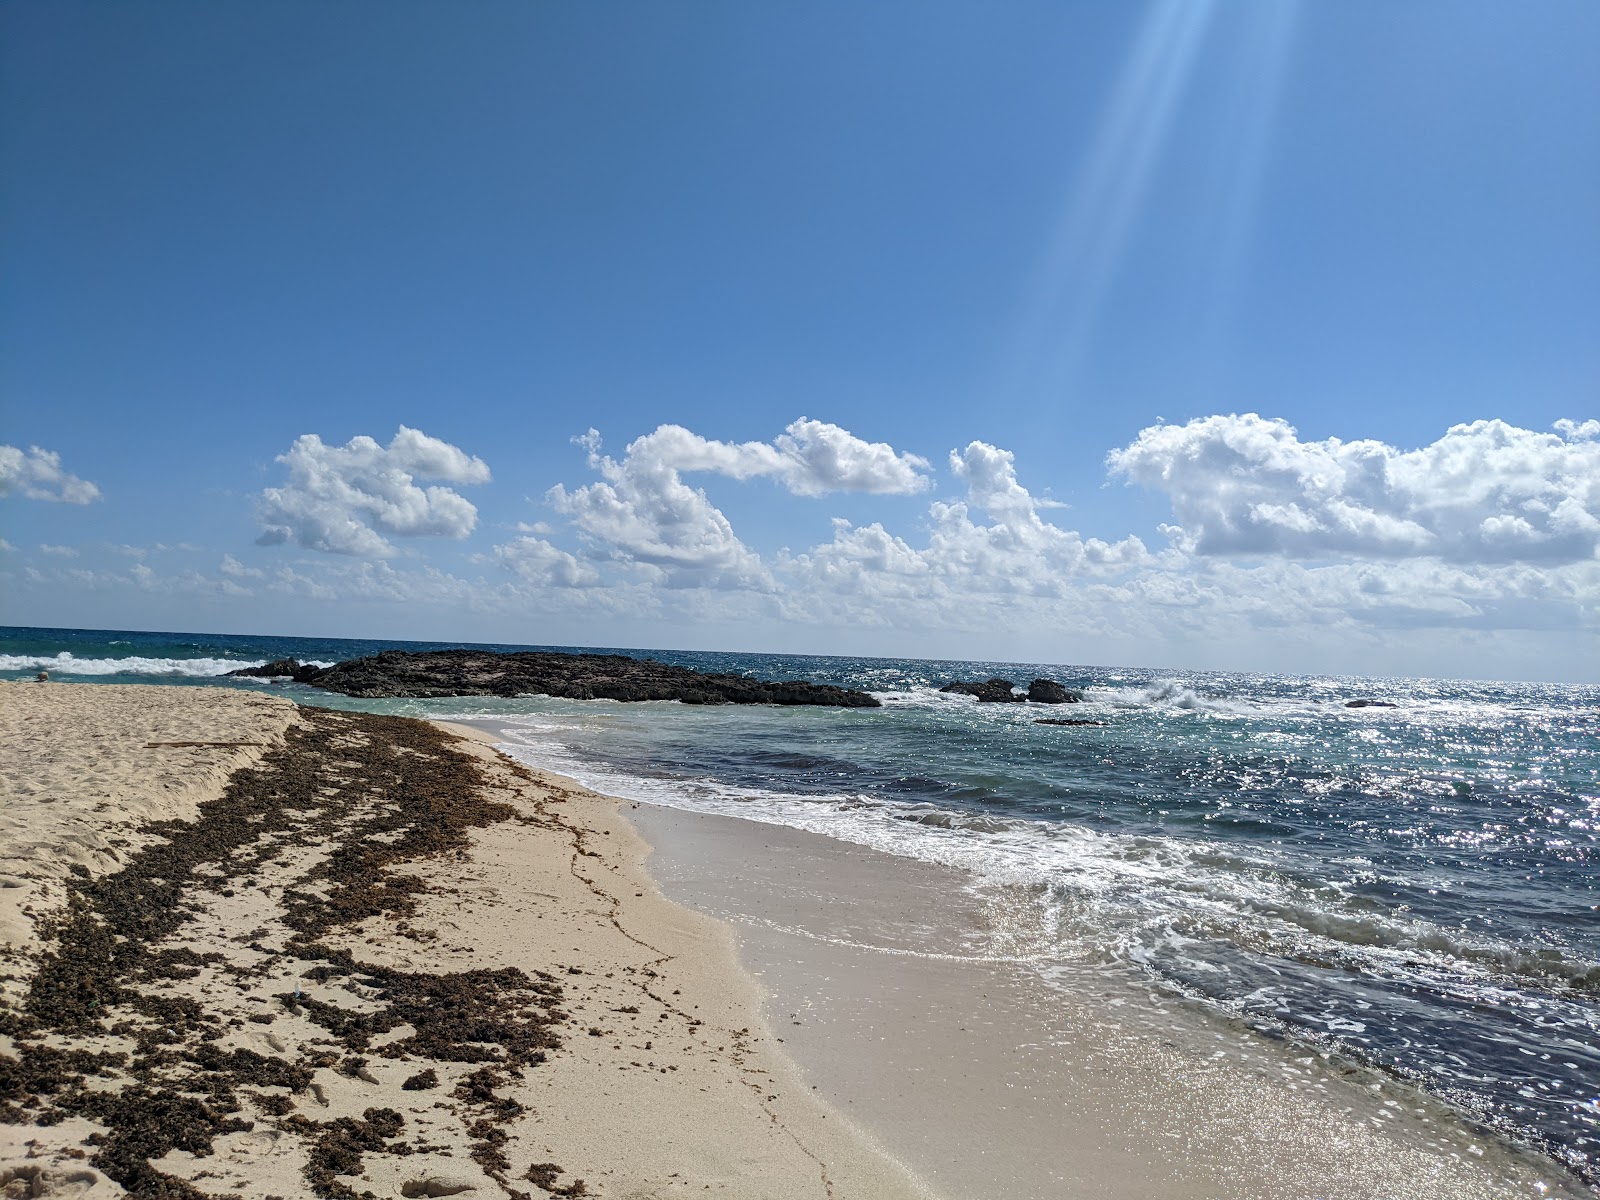 Fotografie cu Playa Punta Morena cu nivelul de curățenie in medie